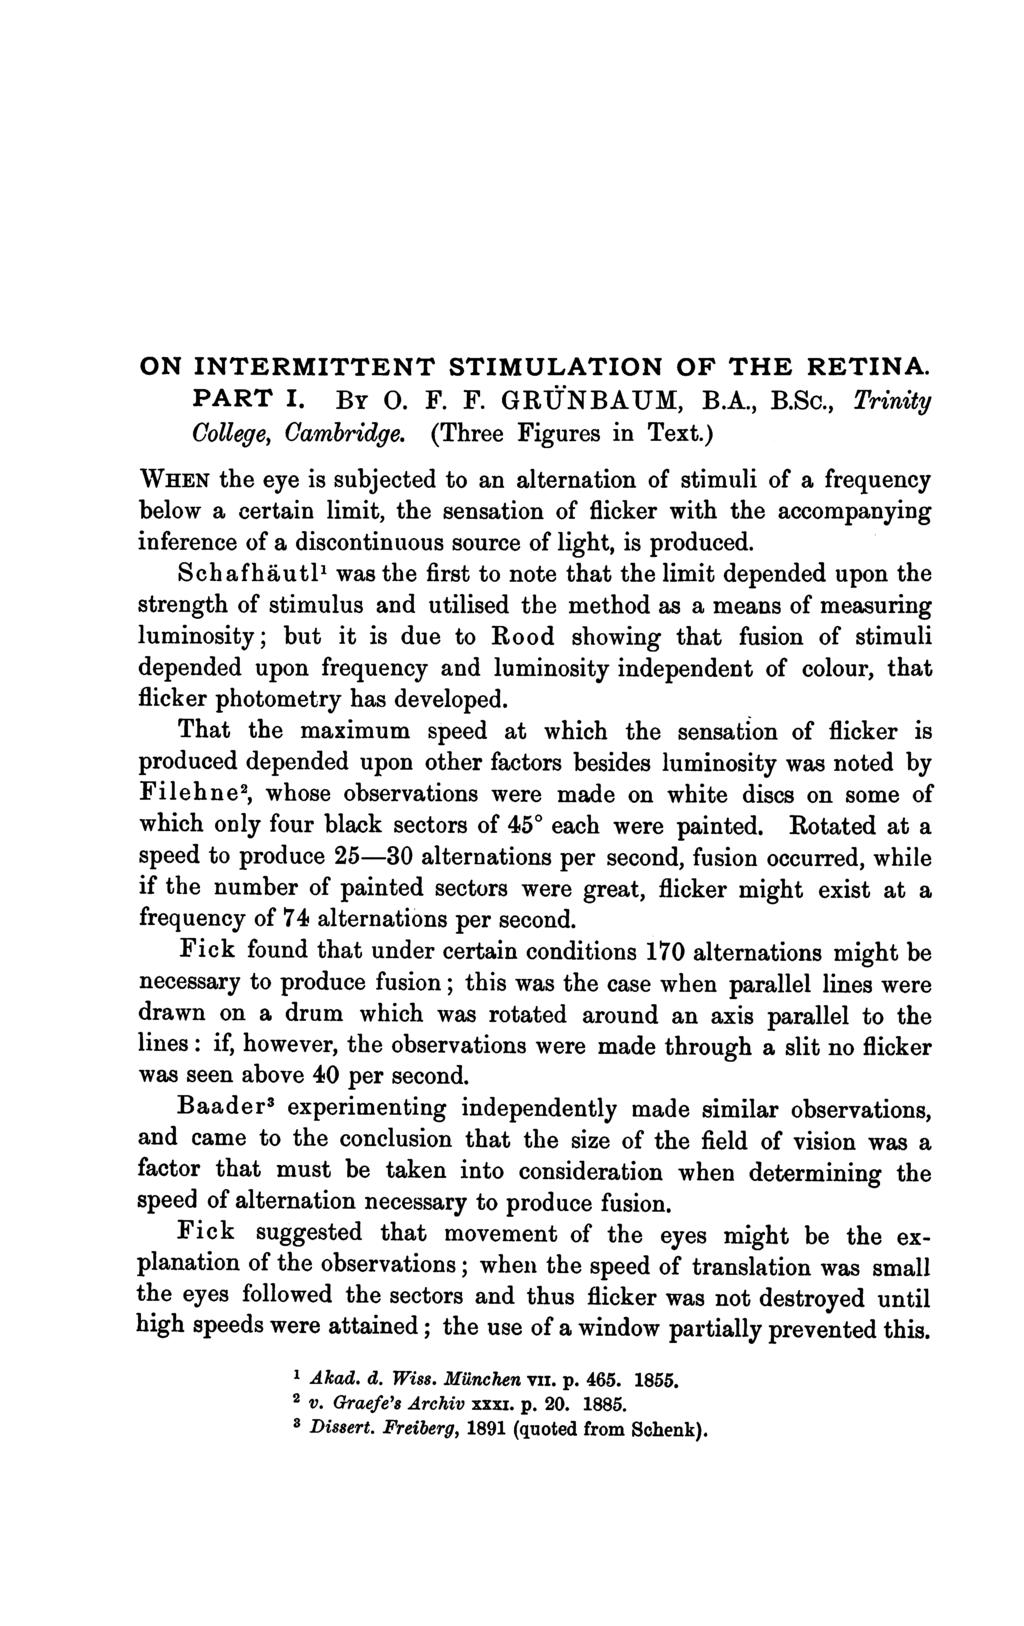 ON INTERMITTENT STIMULATION OF THE RETINA. PART I. BY 0. F. F. GRUNBAUM, B.A., B.Sc., Trinity College, Cambridge. (Three Figures in Text.